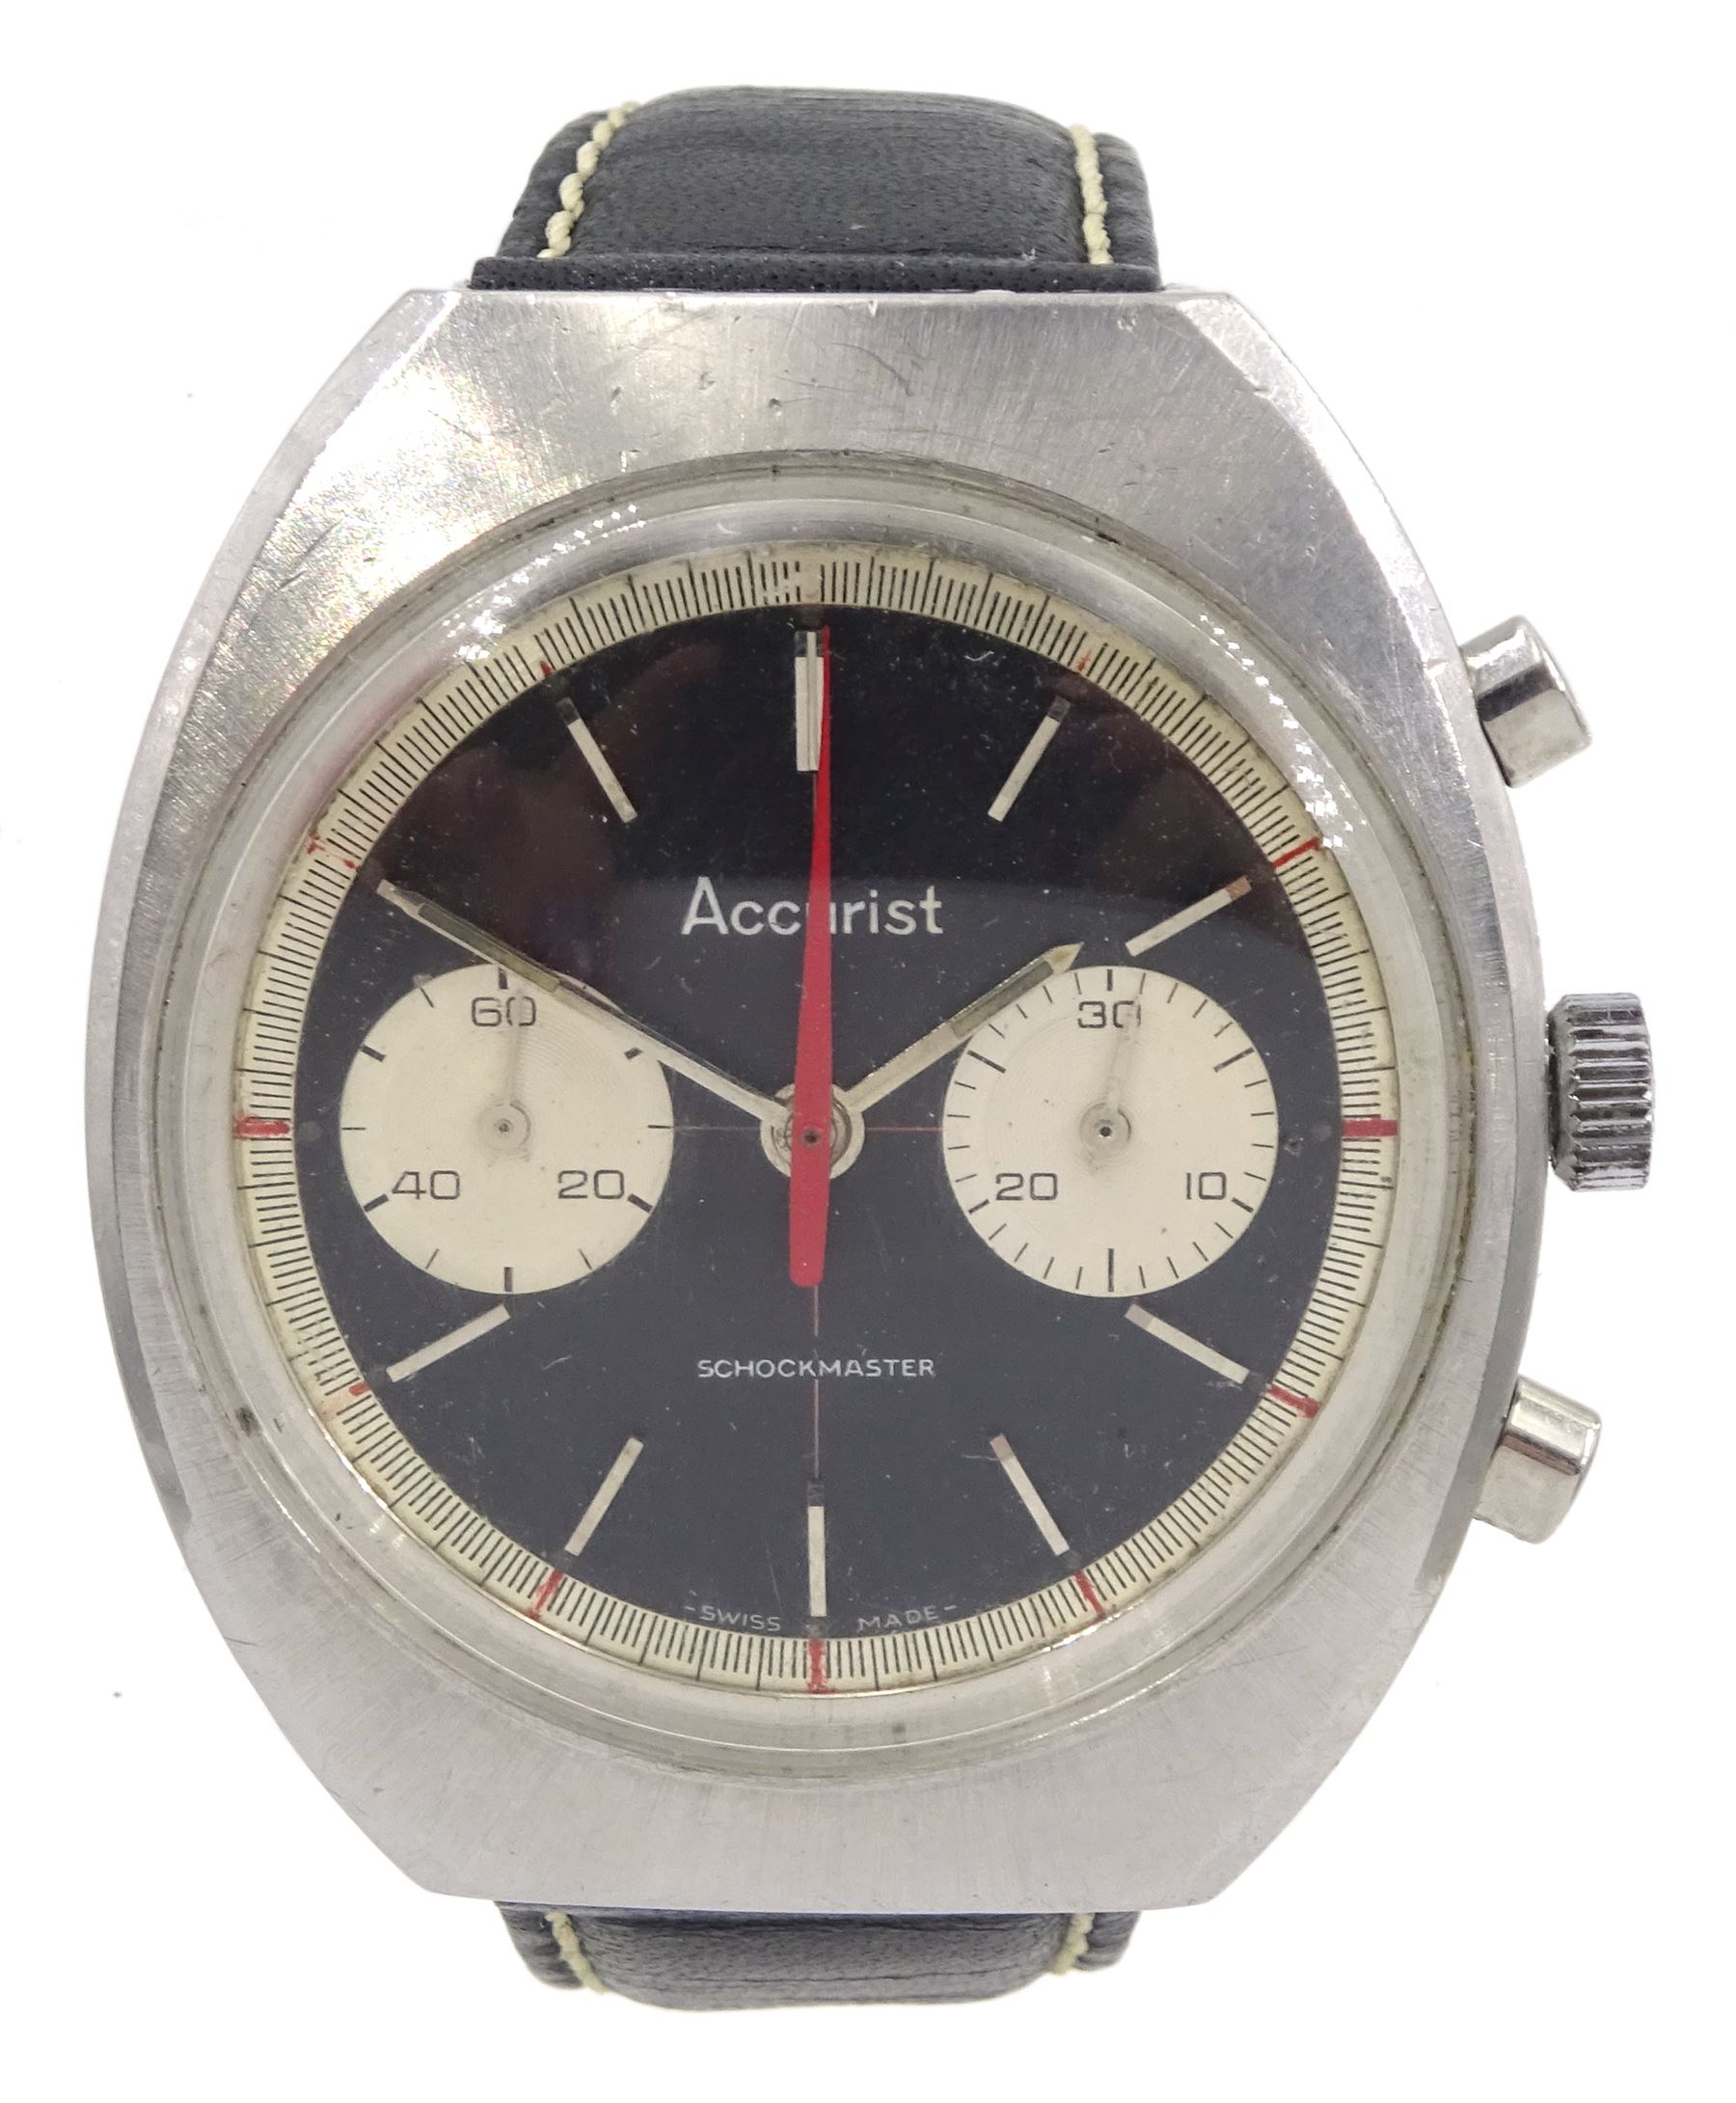 Accurist Shockmaster gentleman's stainless steel manual wind chronograph wristwatch